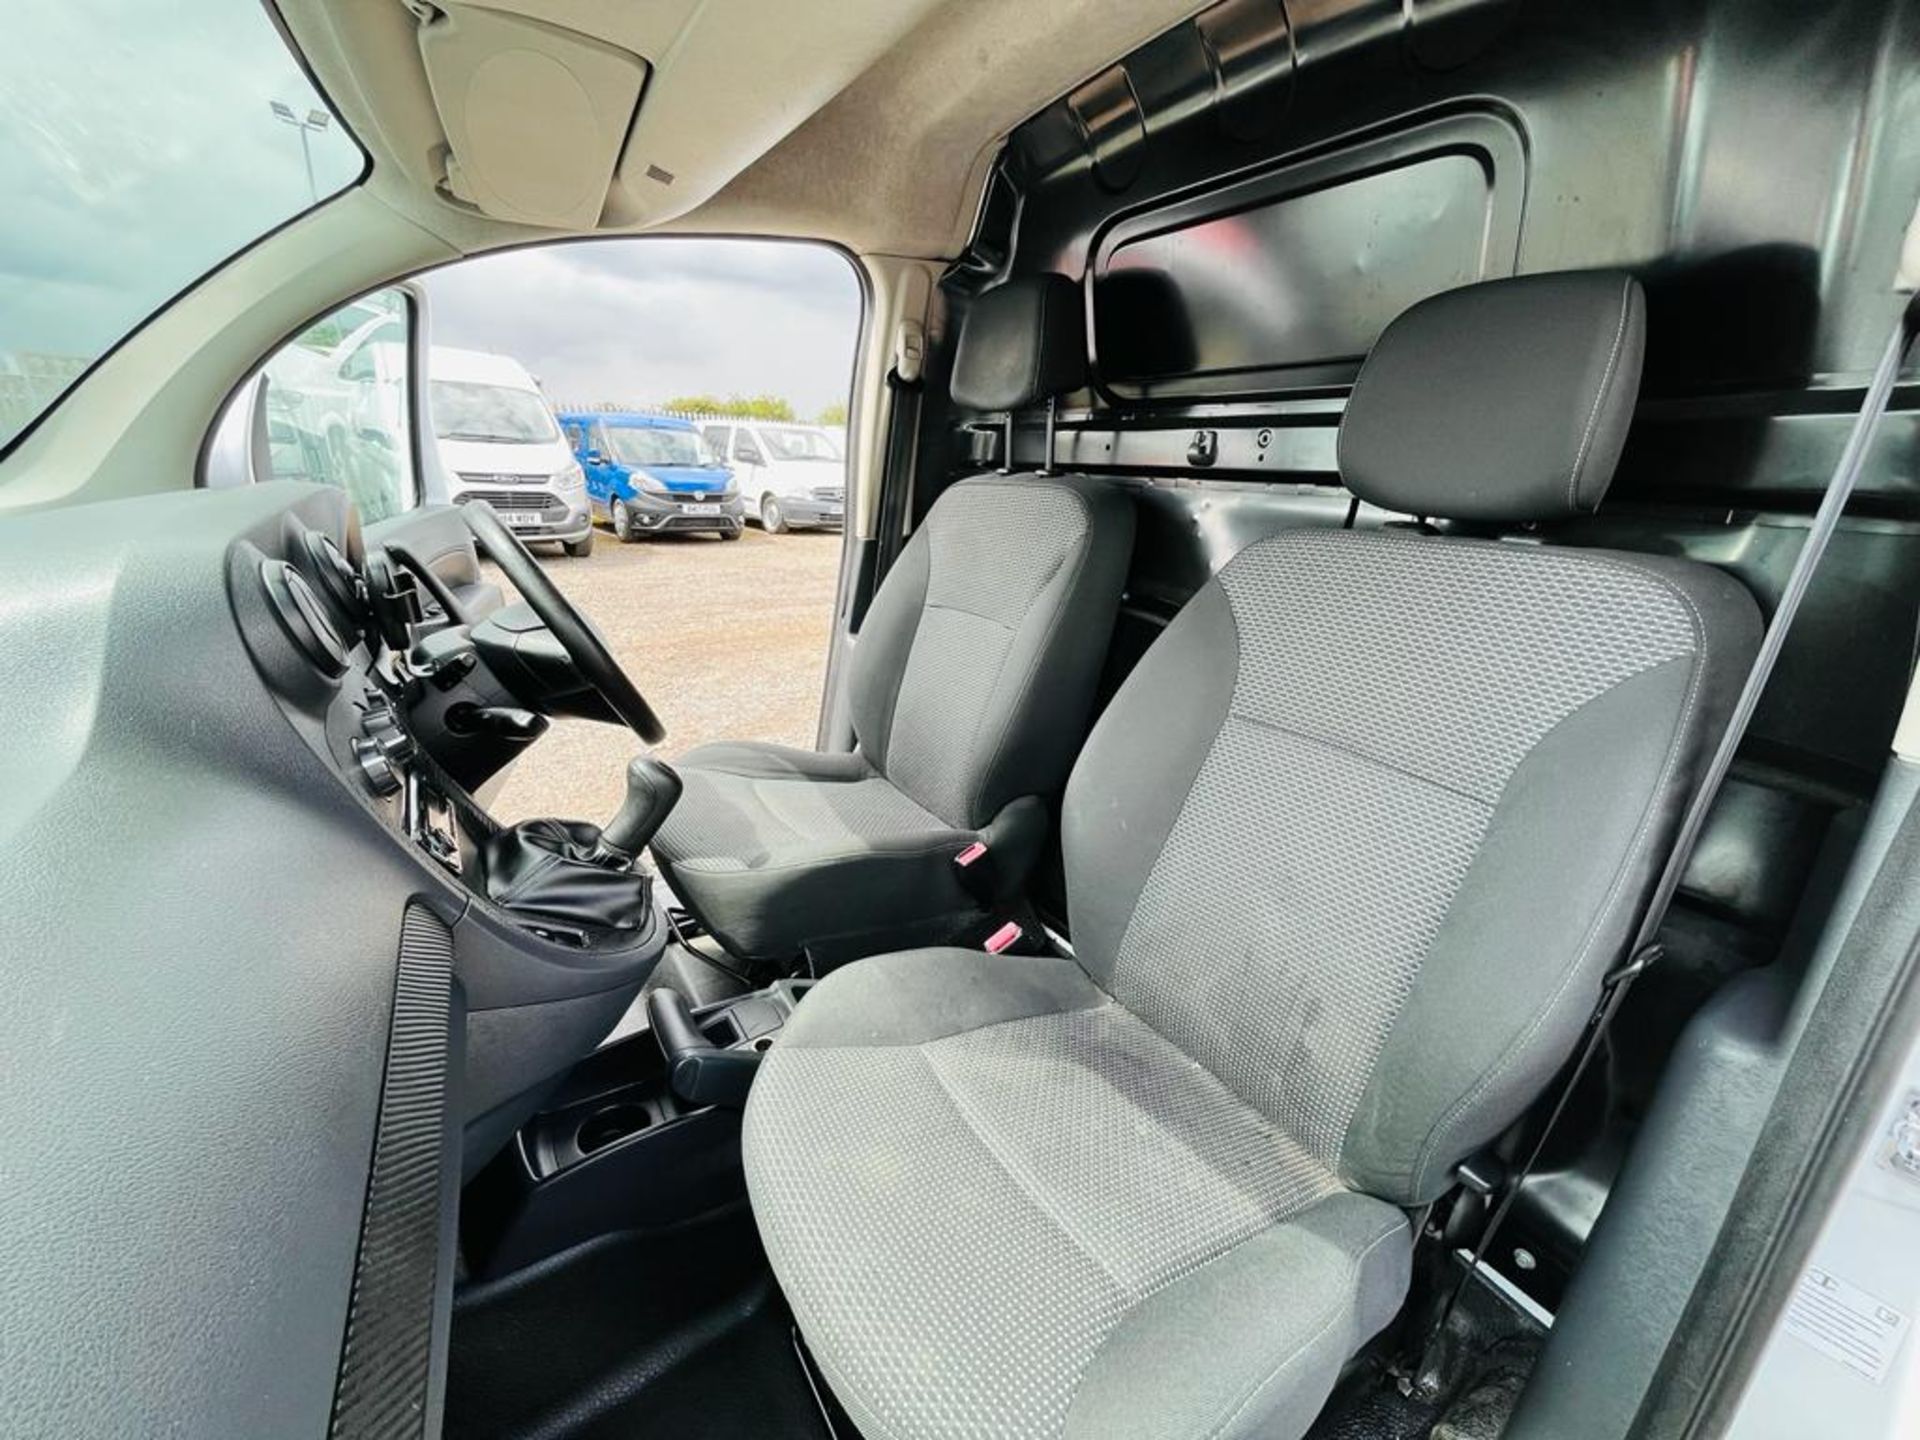 ** ON SALE ** Mercedes Benz Citan 1.5 CDI 109 LWB 2014 '14 Reg' - Panel Van - NO VAT - Image 24 of 26